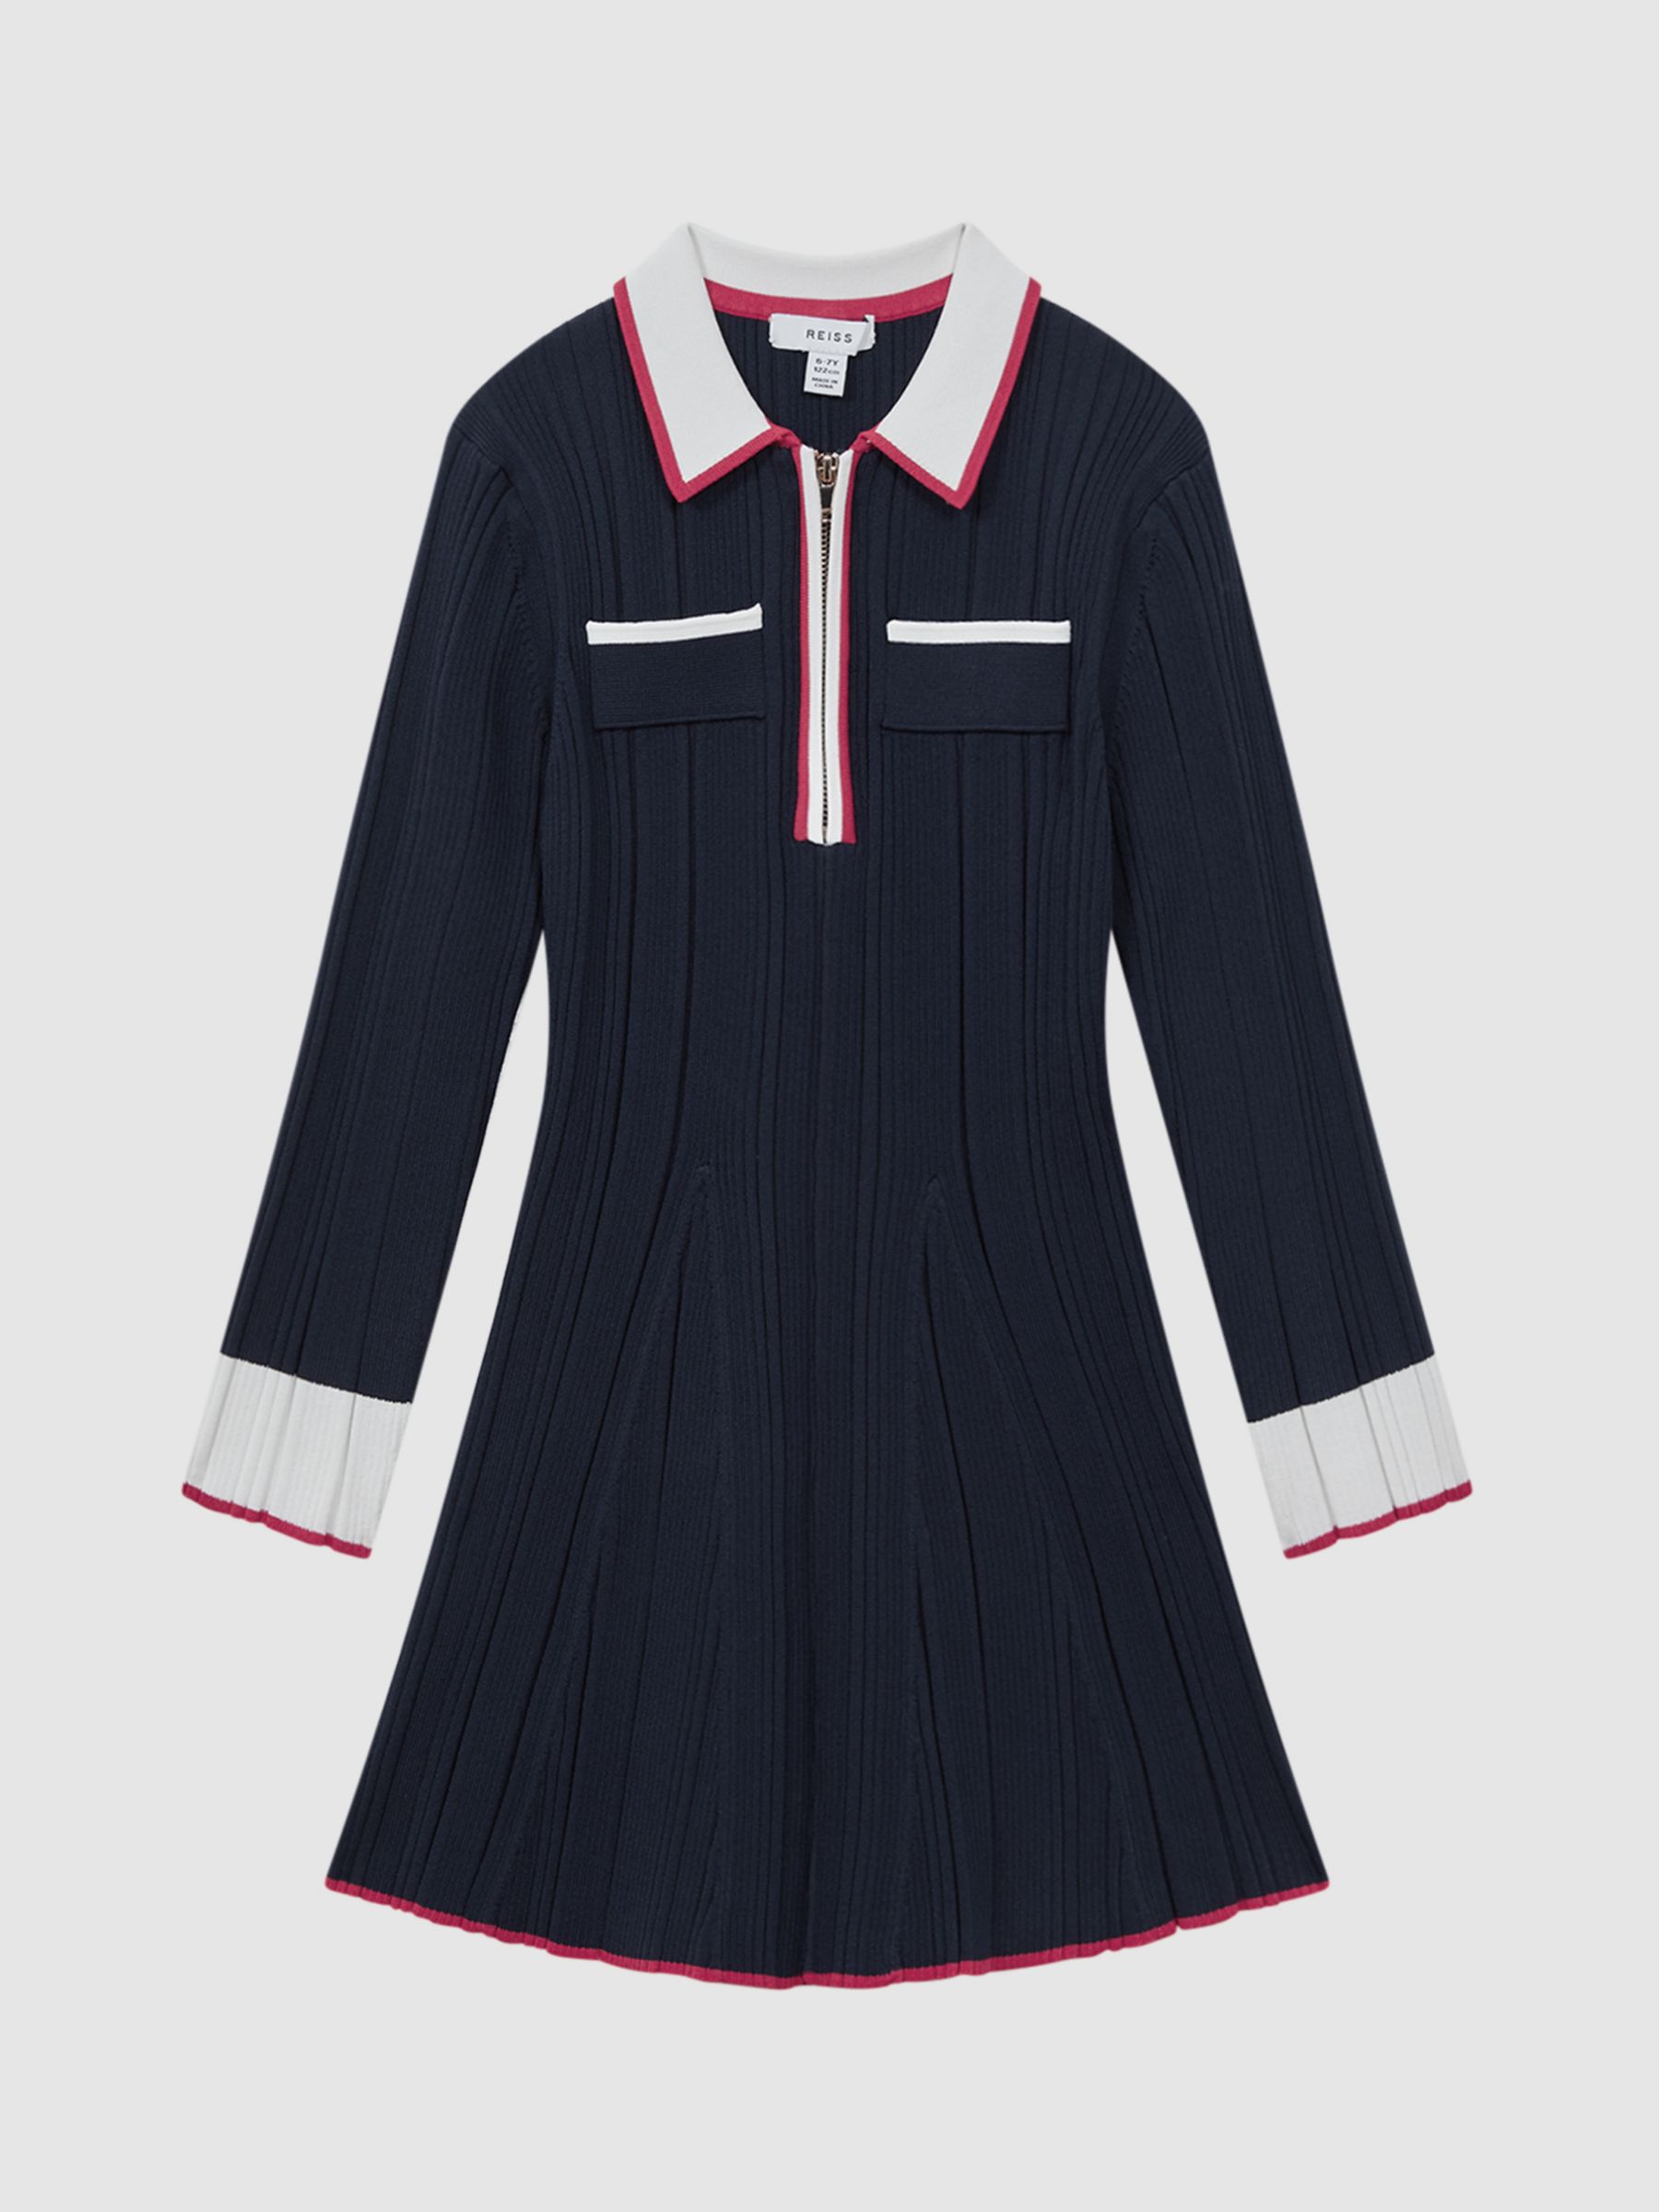 Reiss Kids' Annie Knitted Dress, Navy, 4-5 years